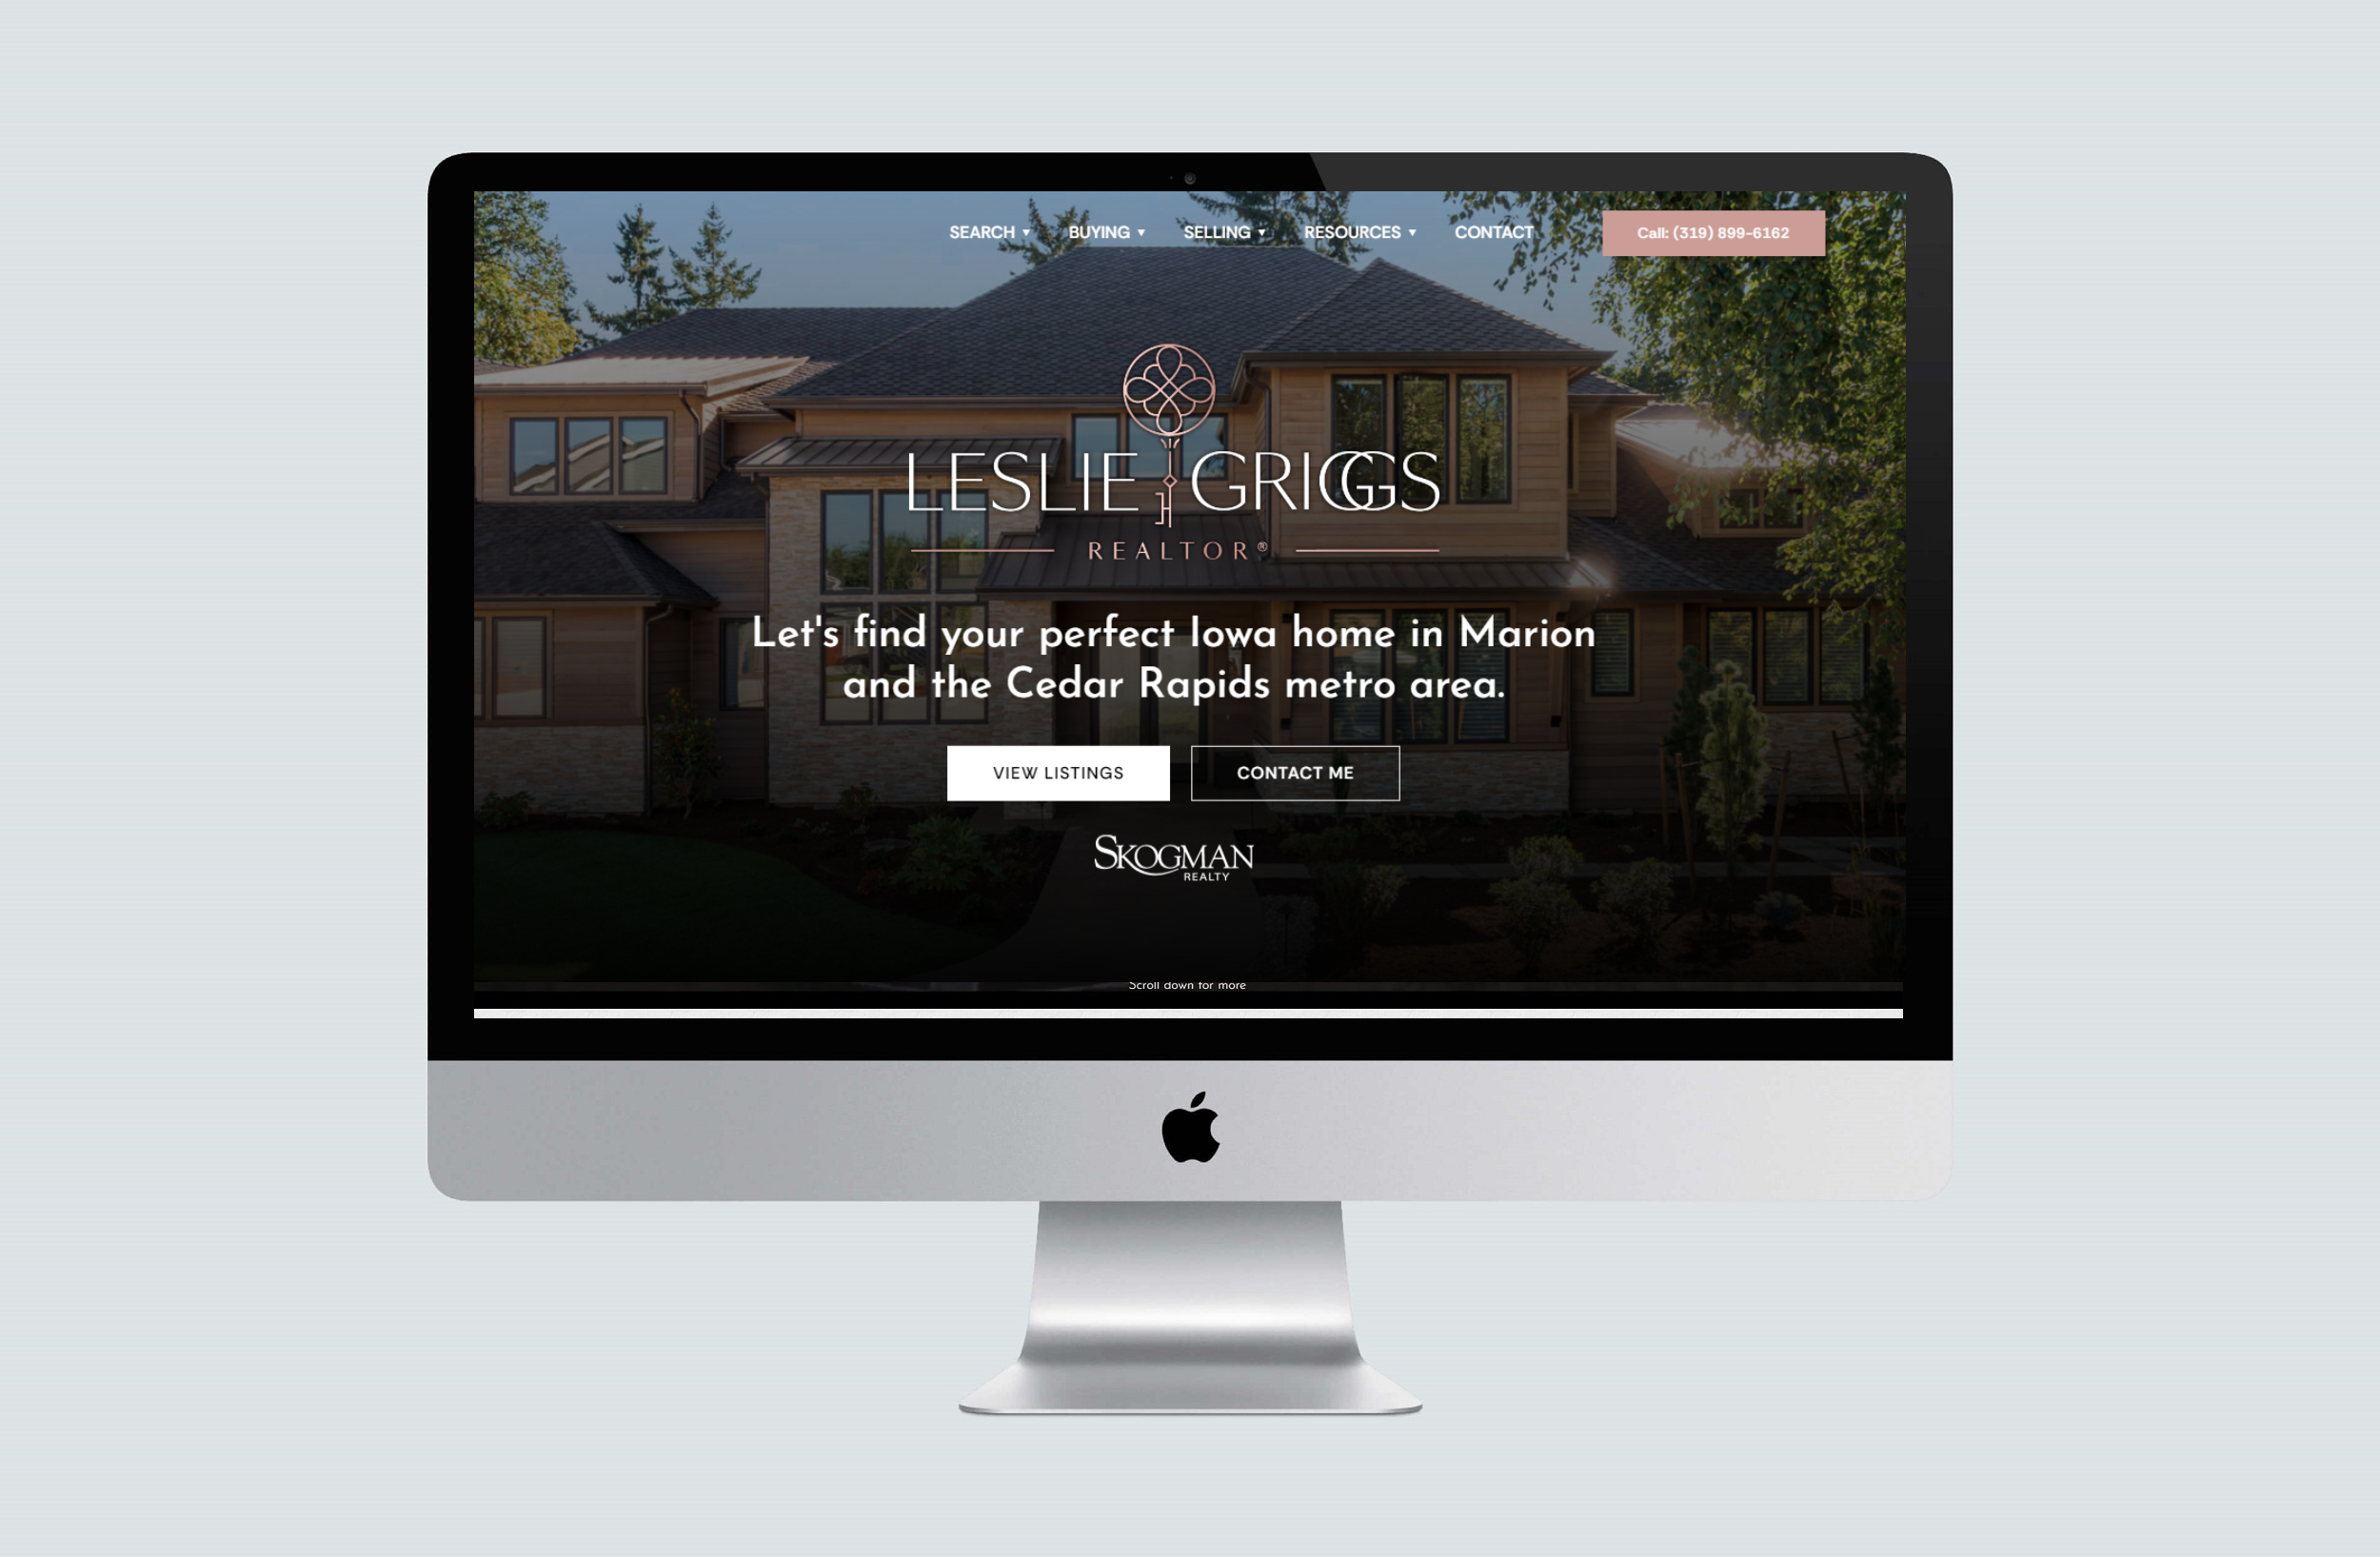 Leslie Griggs real estate website